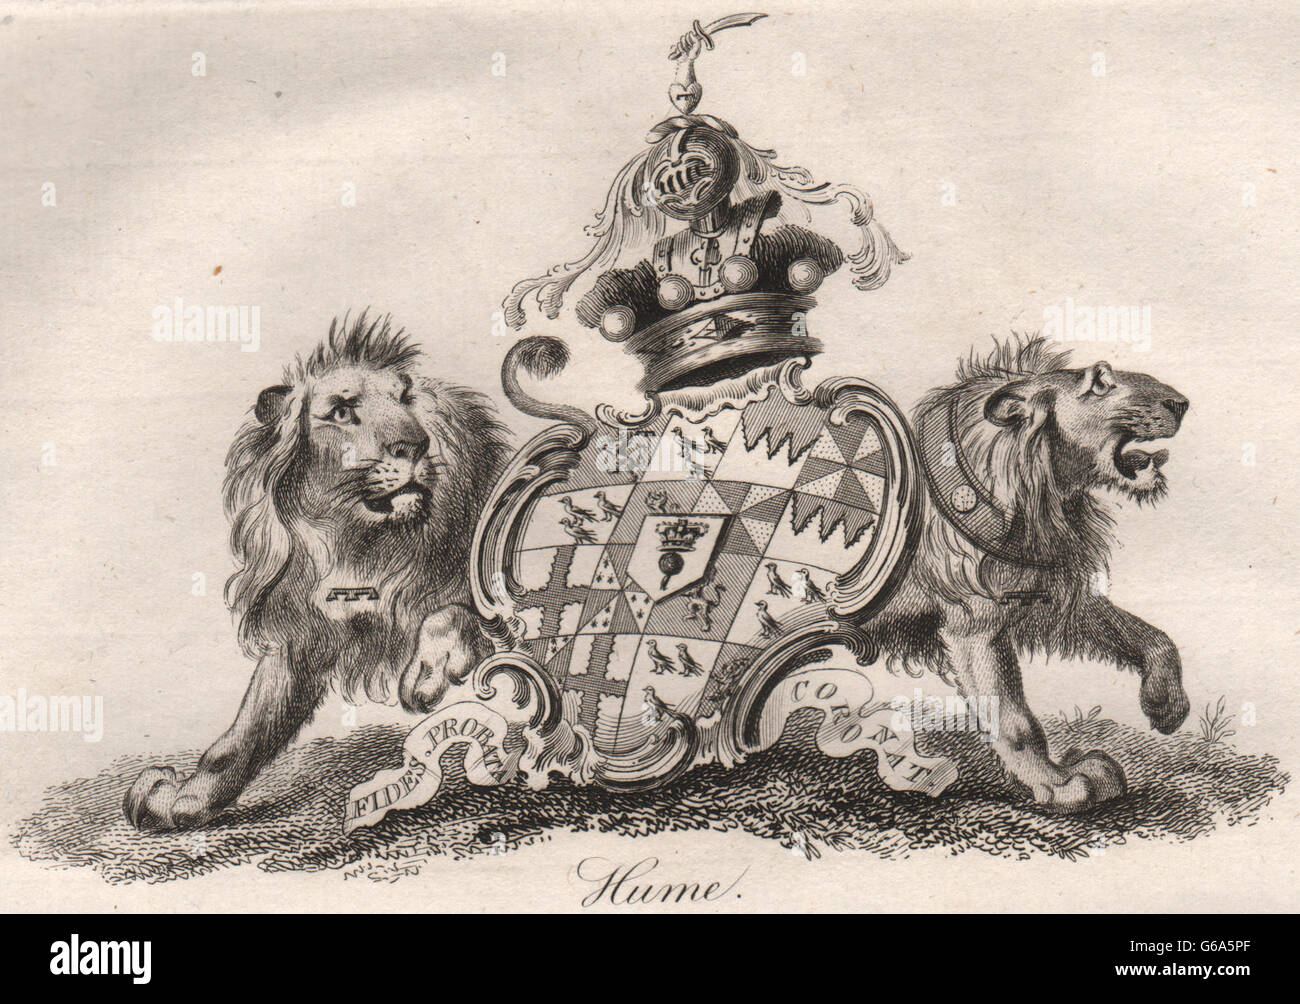 HUME: Coat of Arms. Heraldry, antique print 1790 Stock Photo